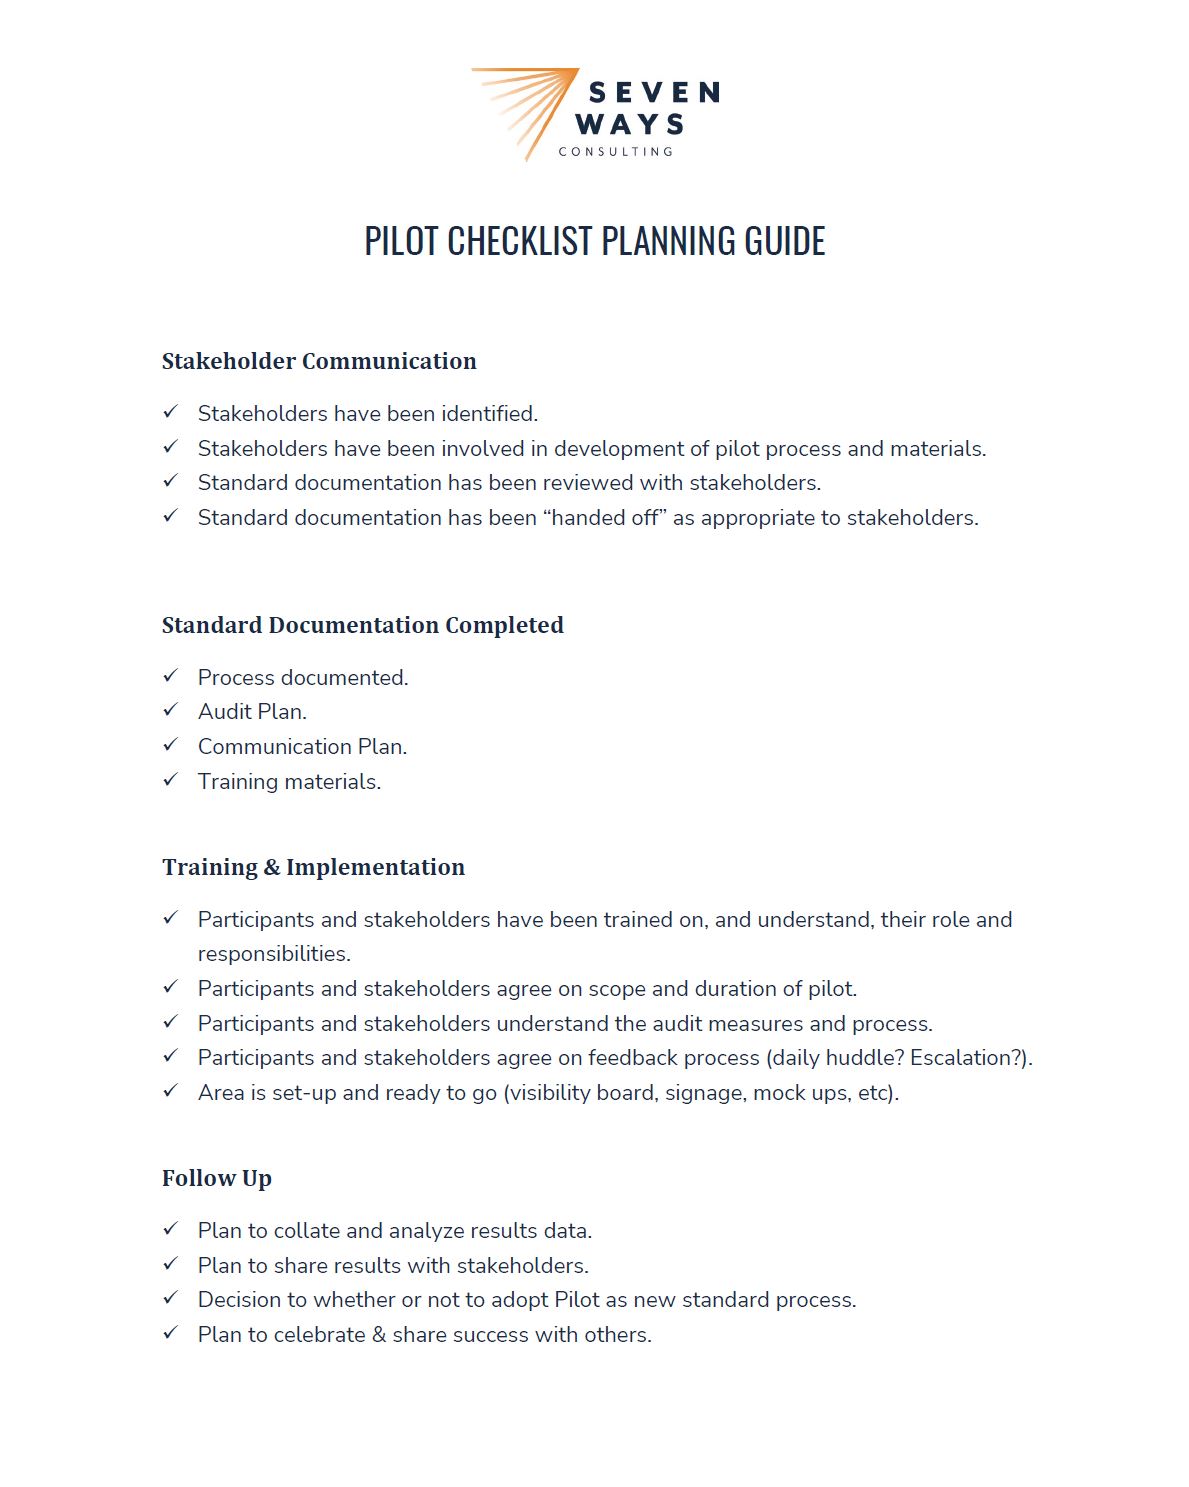 Pilot Checklist Image